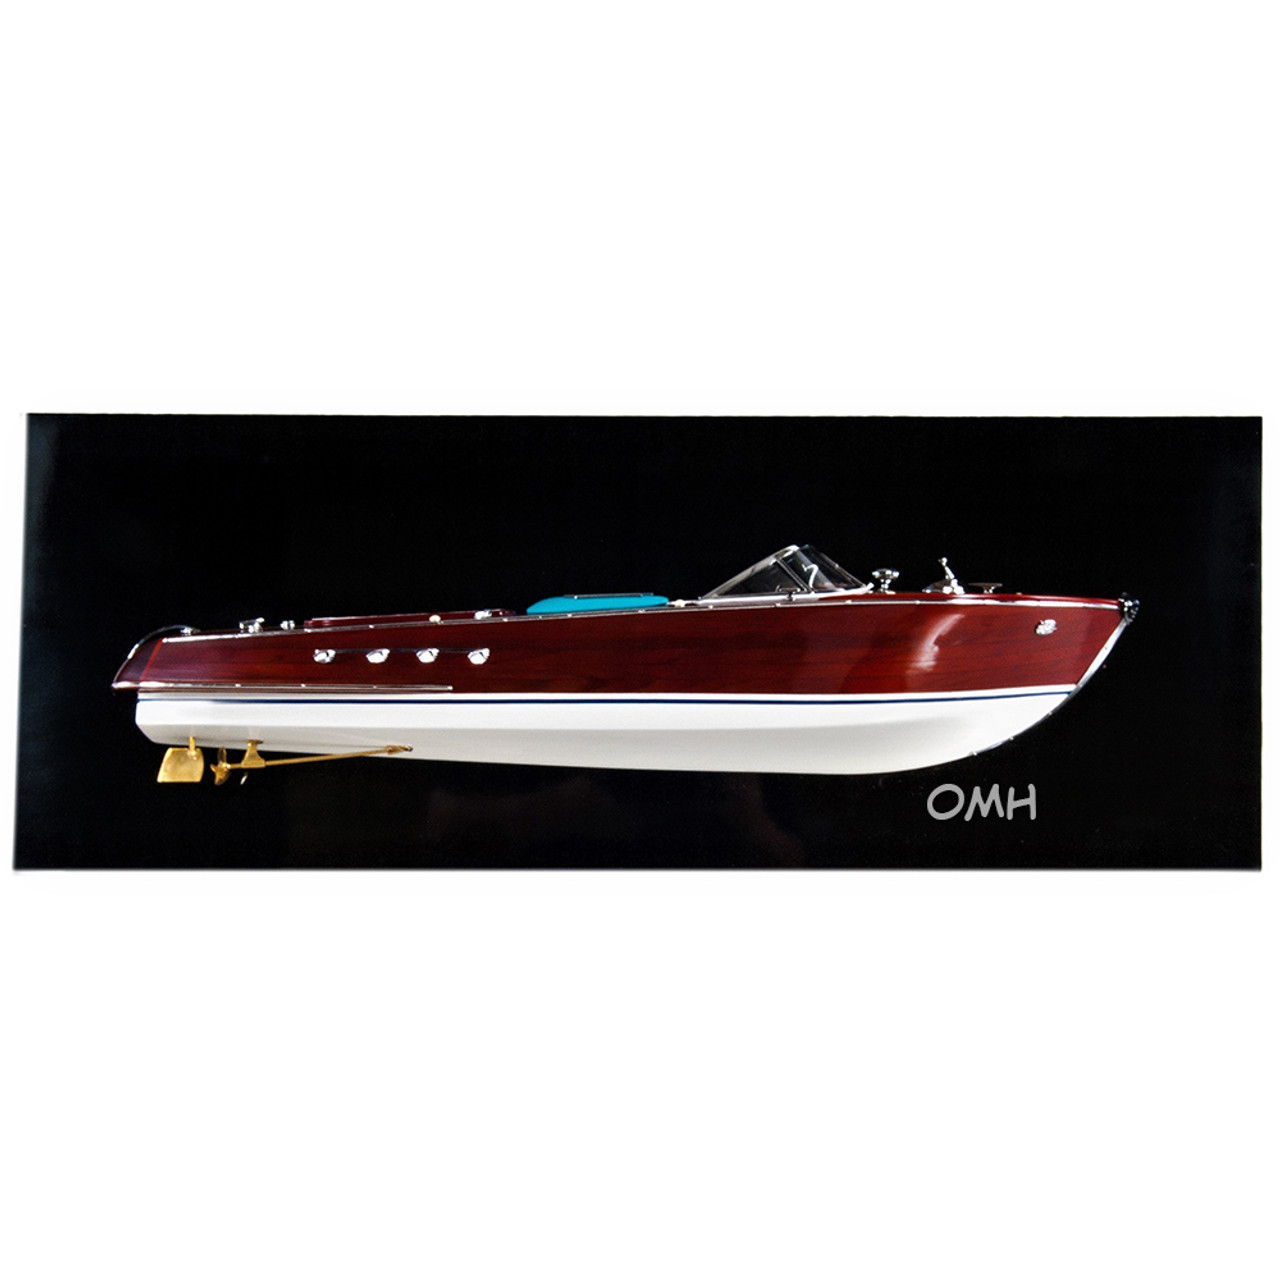 Riva Aquarama Half Hull Model Wooden Italian Speed Boat